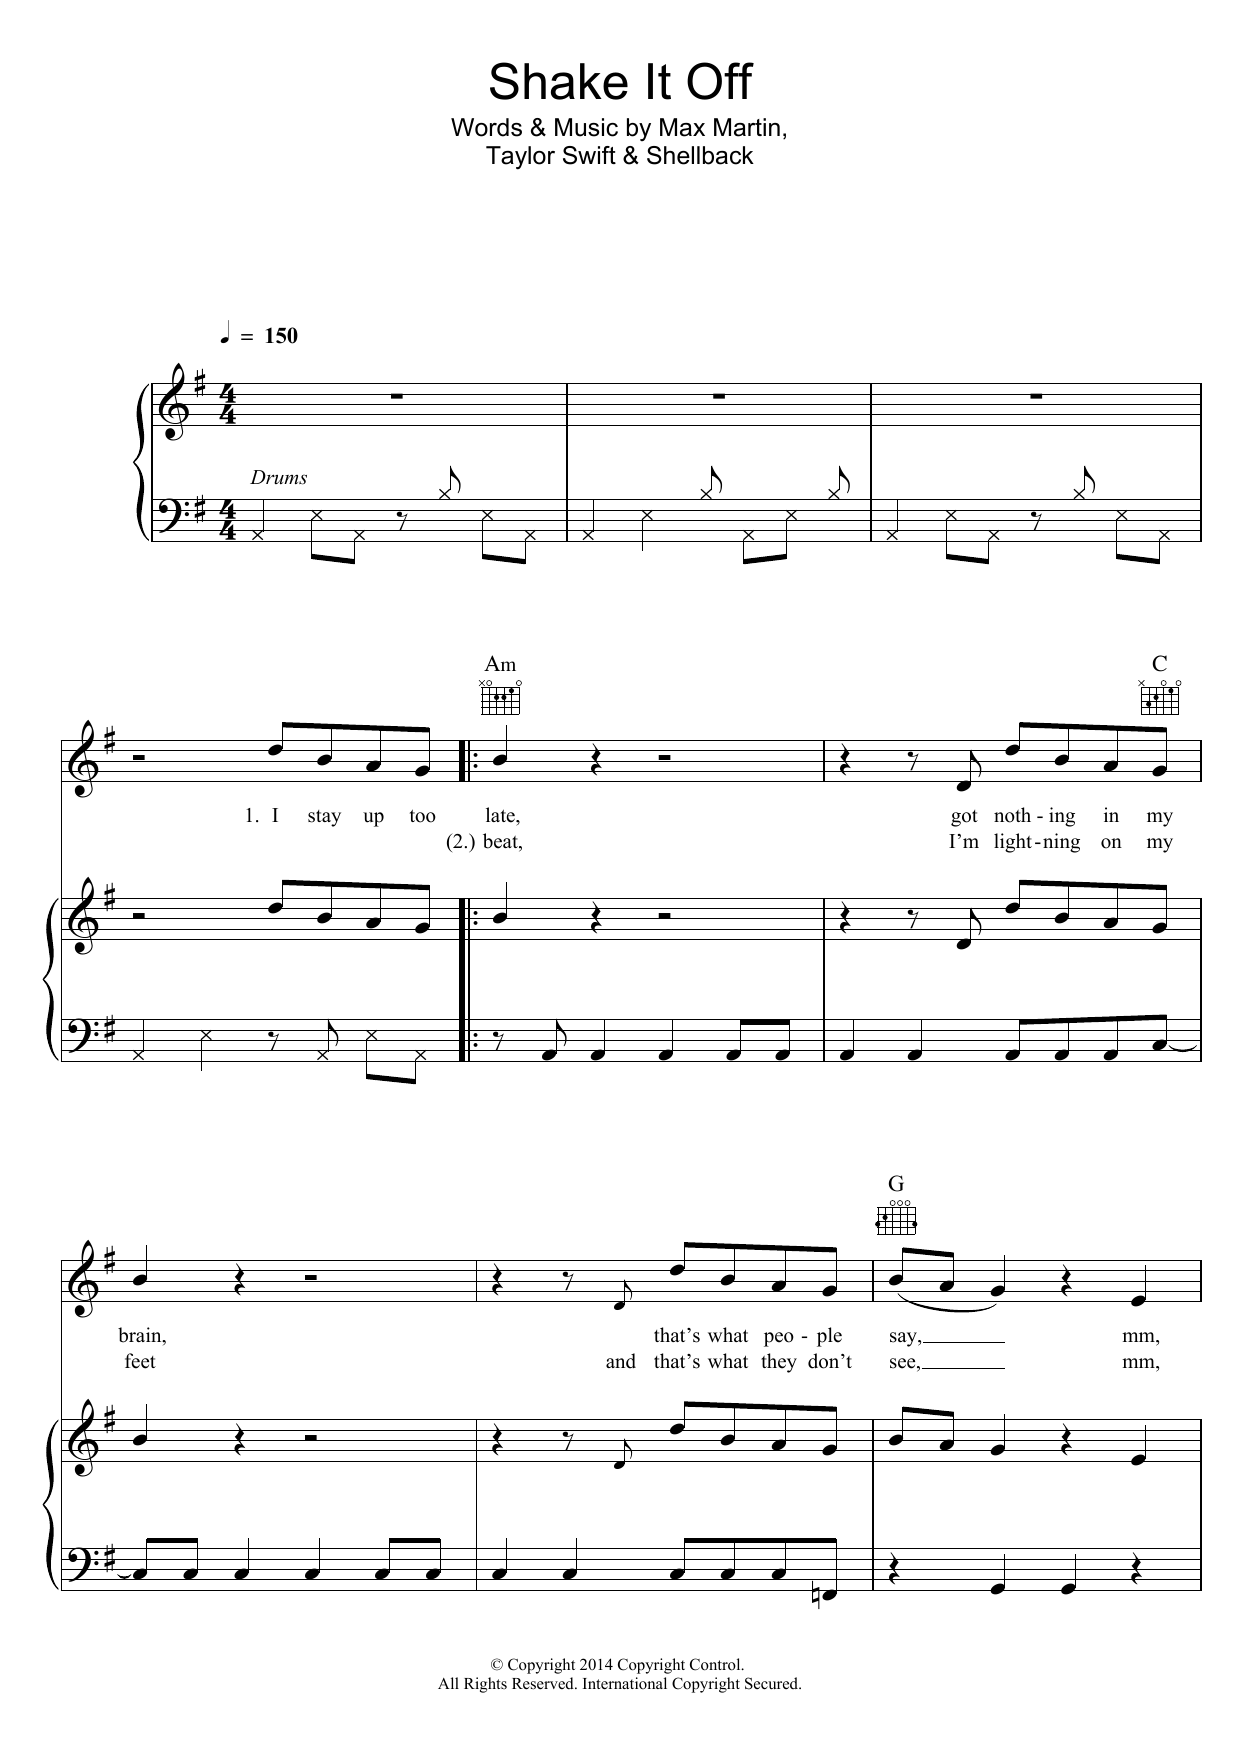 Taylor Swift Shake It Off Sheet Music Notes & Chords for Ukulele - Download or Print PDF